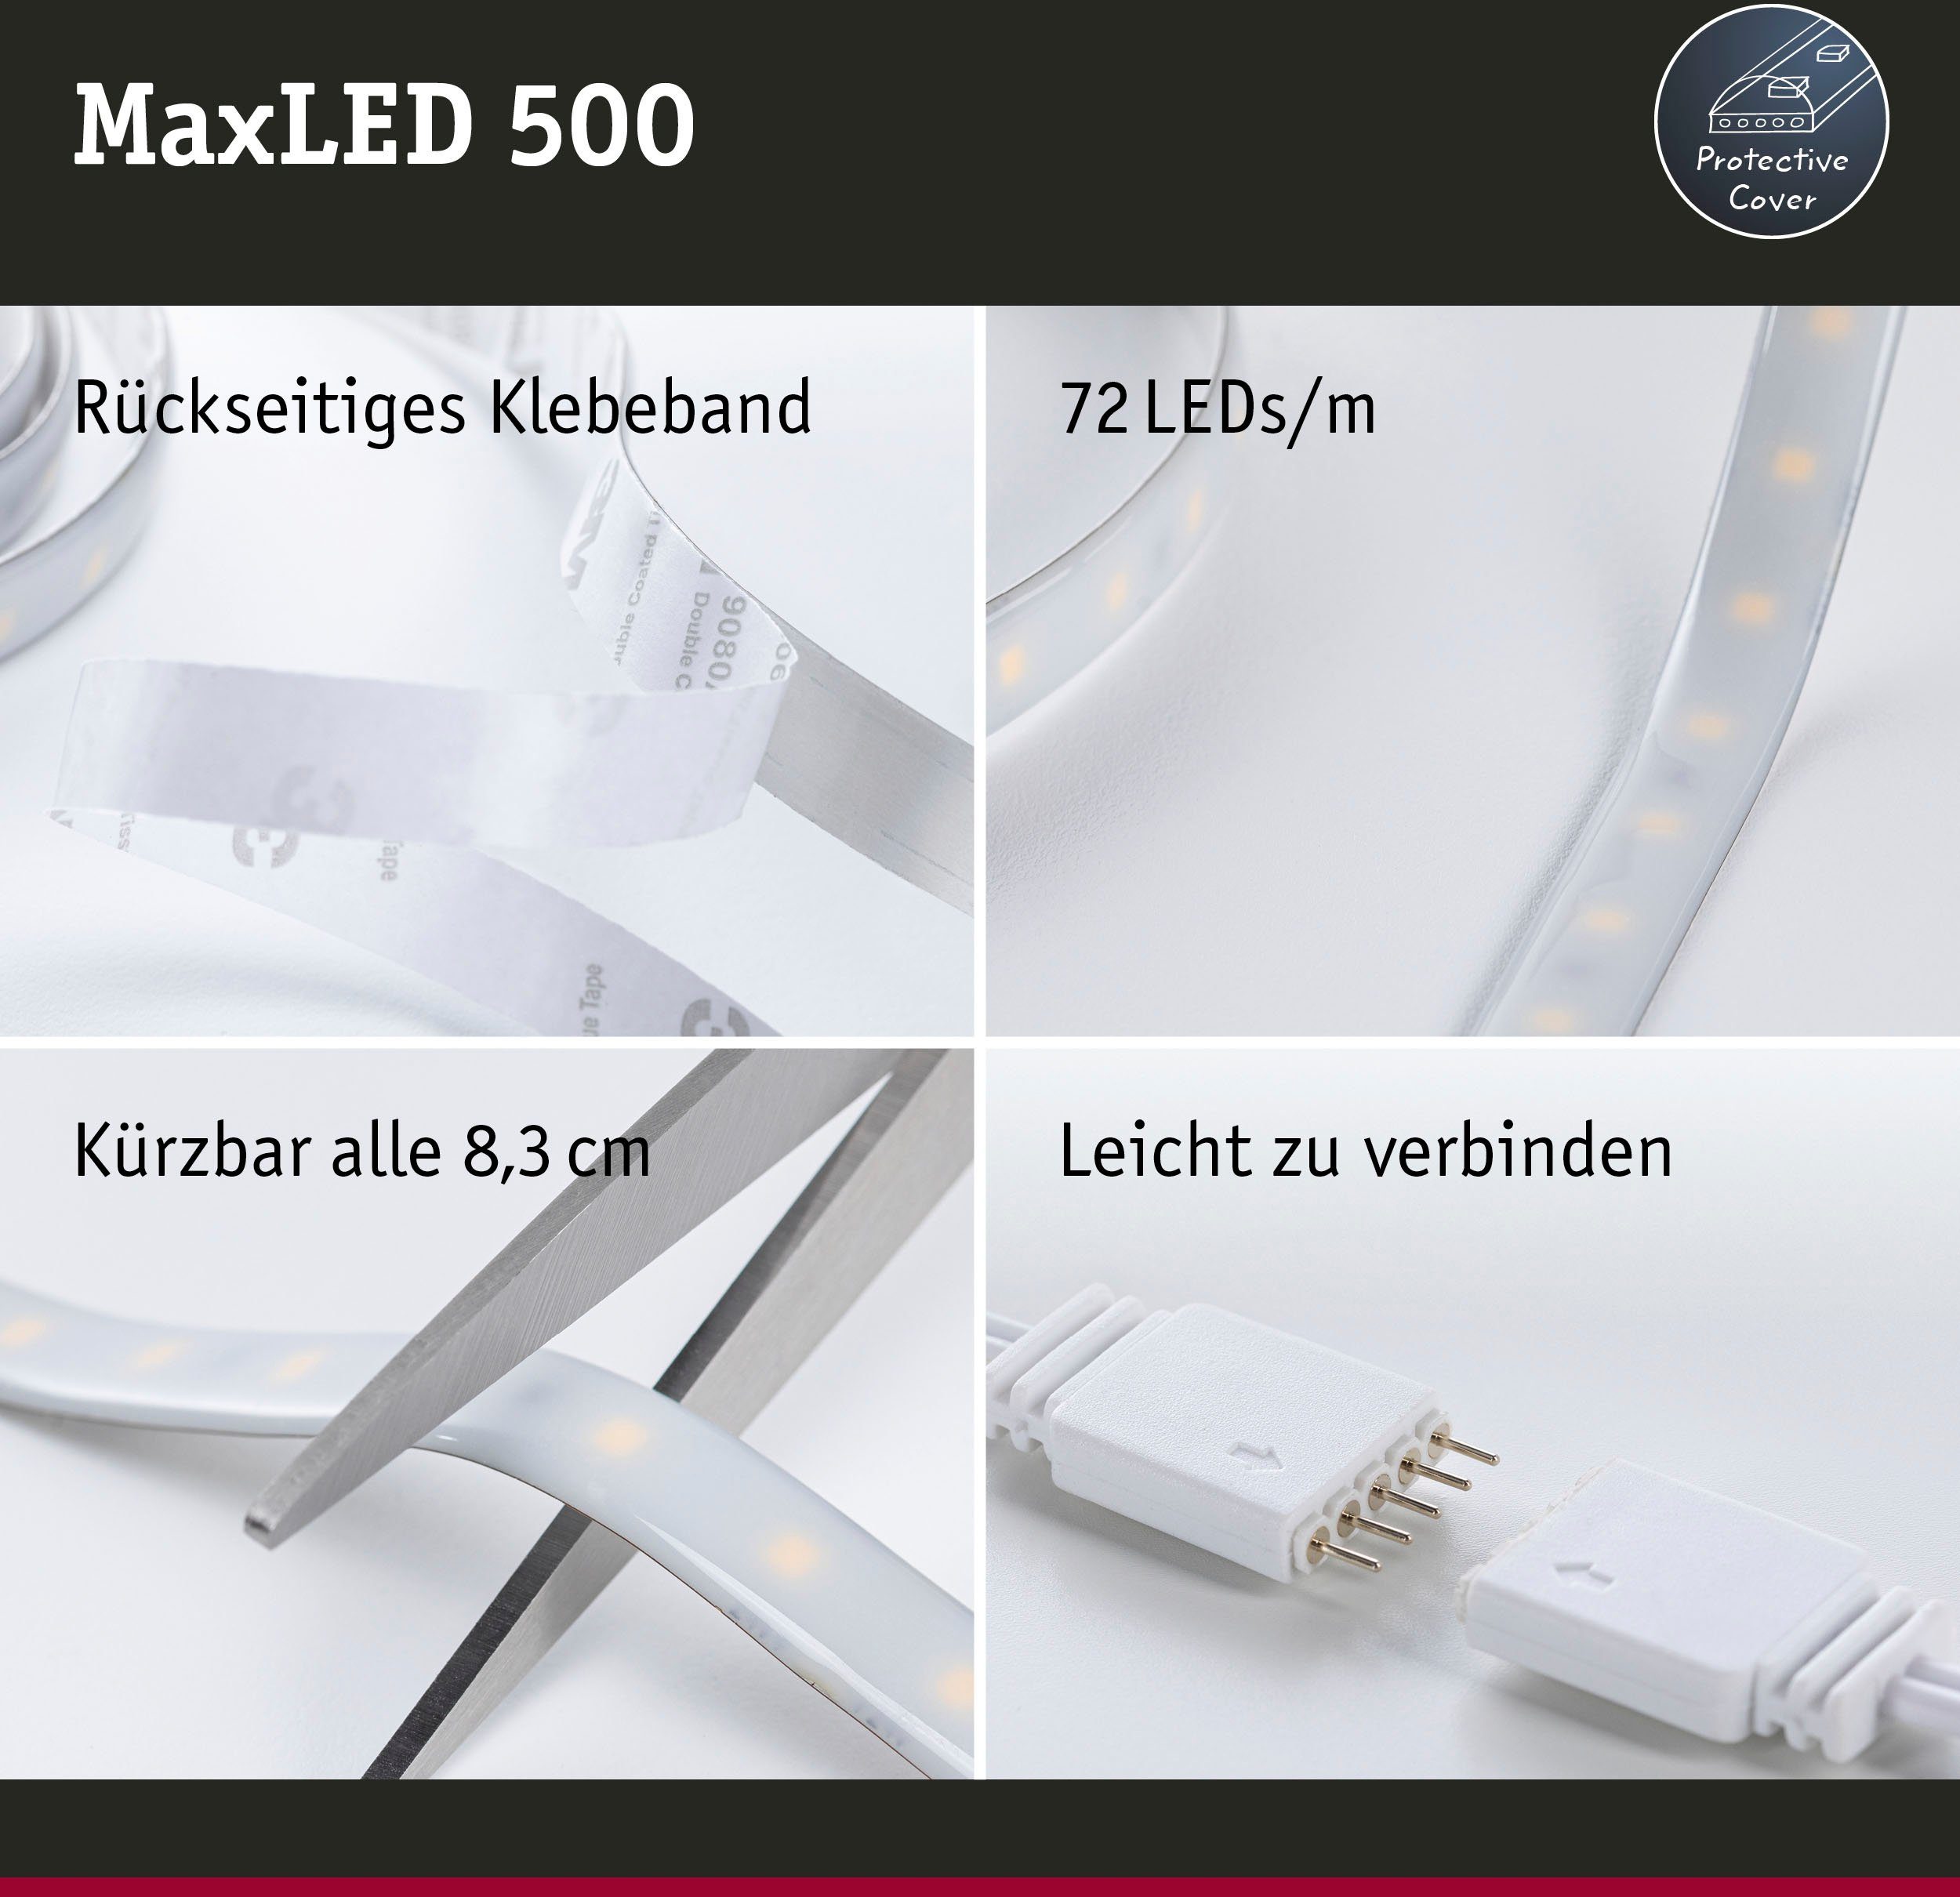 Smart Zigbee, Tunable Home Paulmann 500 1-flammig, 3m, beschichtet White, MaxLED LED-Streifen Basisset